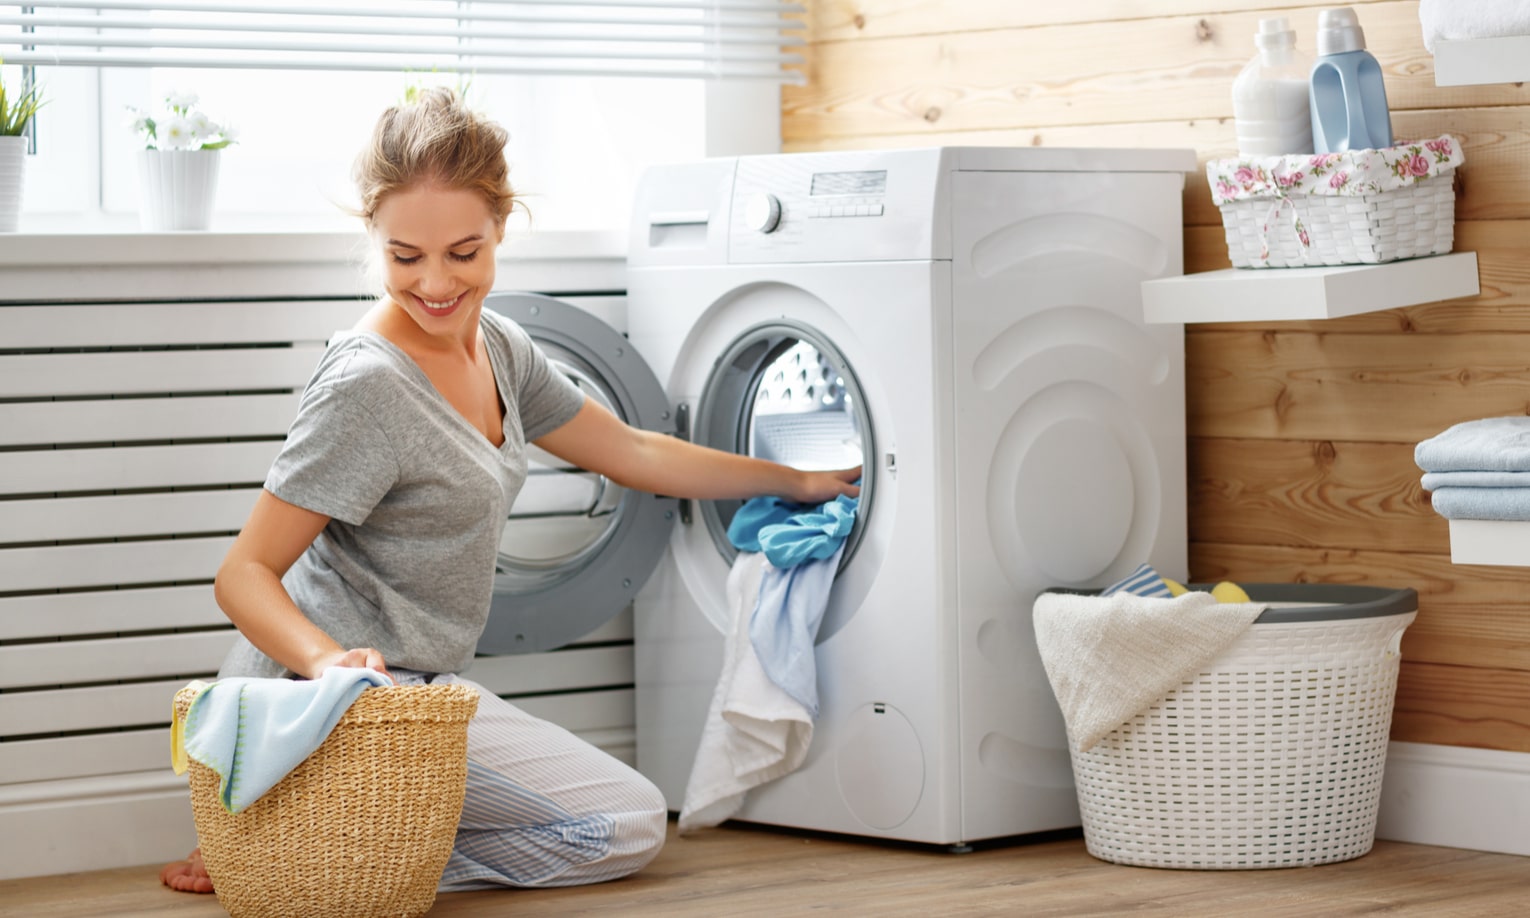 moteris skalbia drabuzius skalbimo masinoje